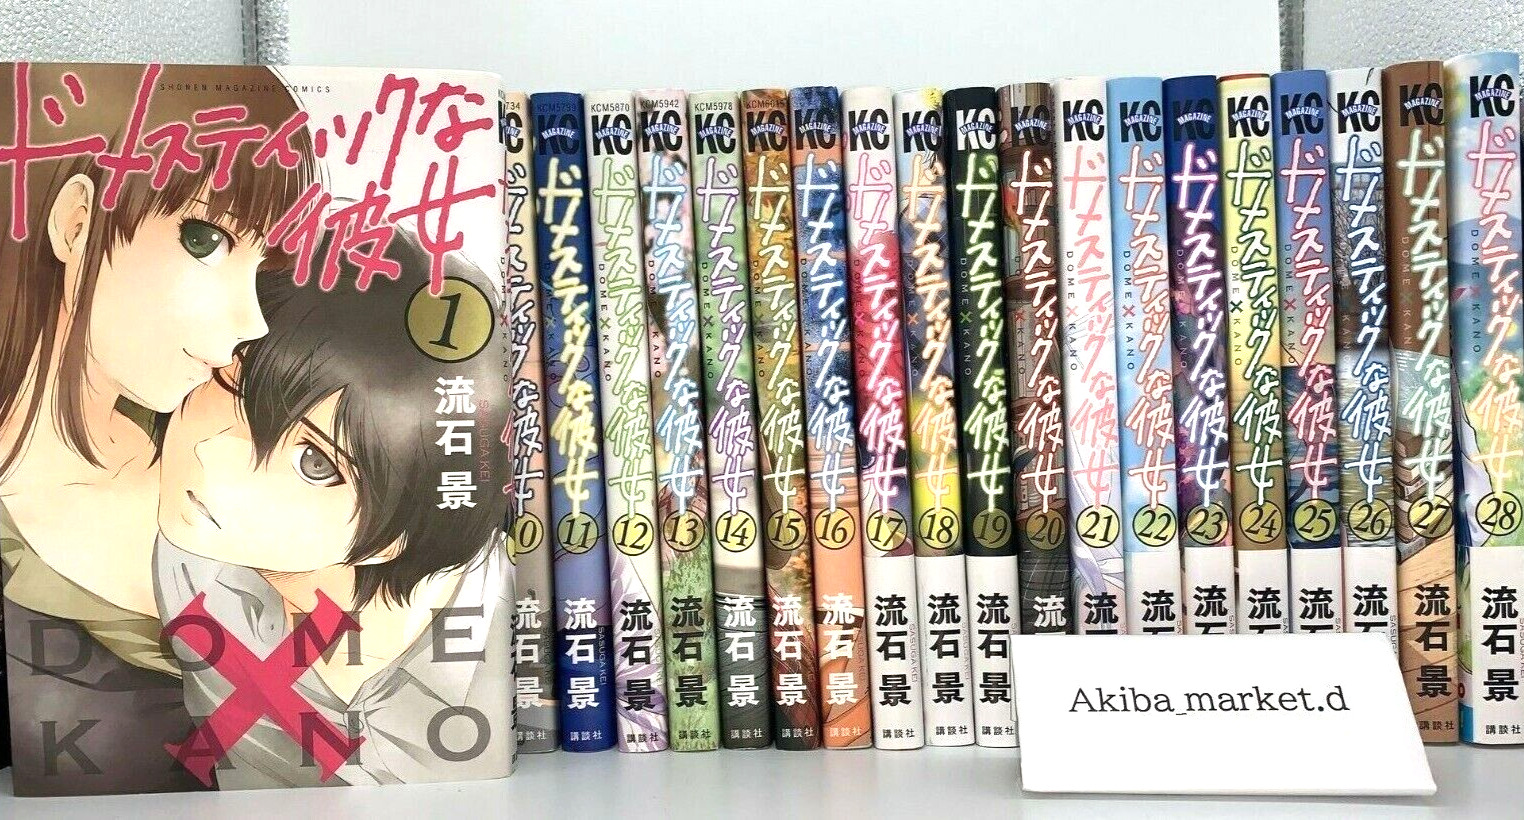 Domestic Girlfriend【Japanese language】Vol.1-28 Complete Full set Manga Comics